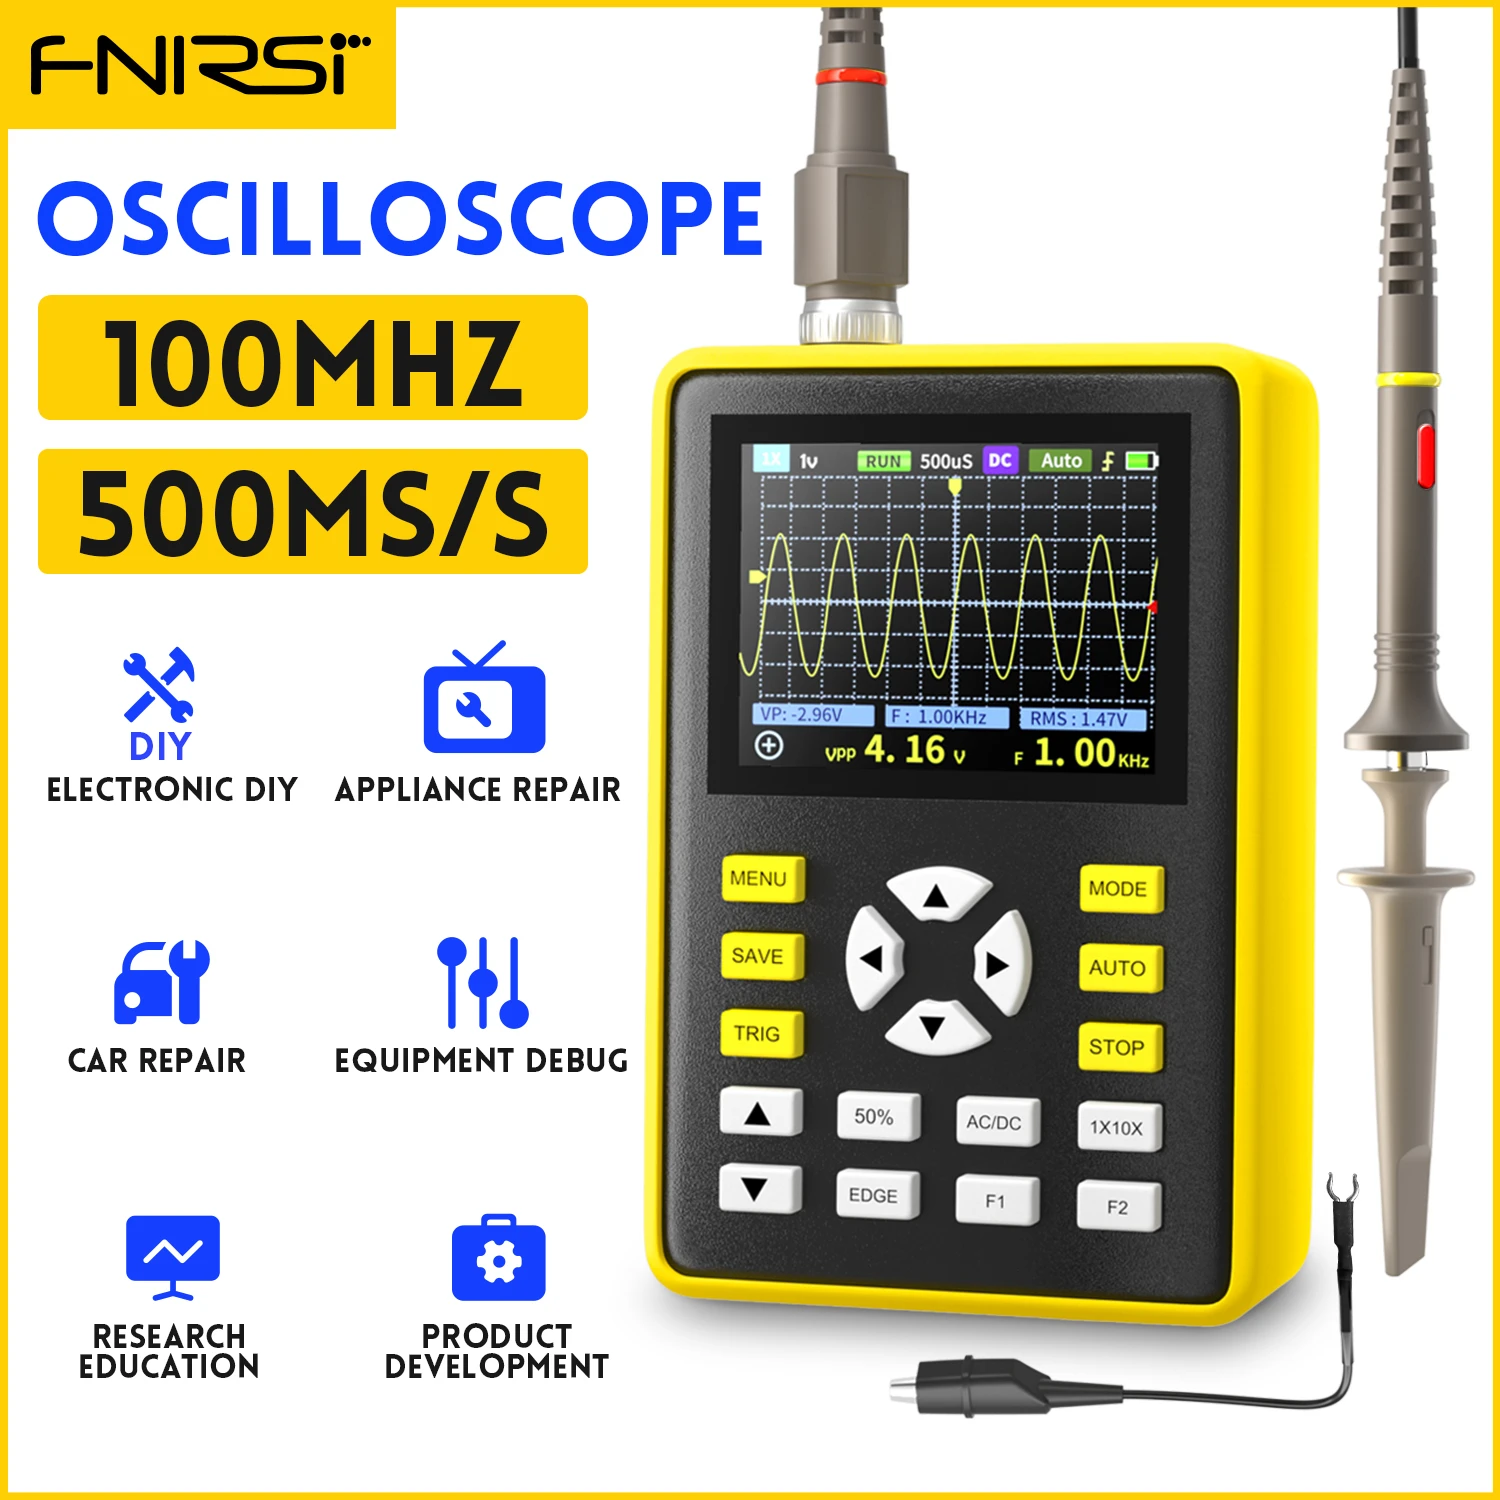 FNIRSI-5012H 2.4-inch  Screen Digital Oscilloscope 500MS/s Sampling Rate 100MHz Analog Bandwidth Support Waveform Storage